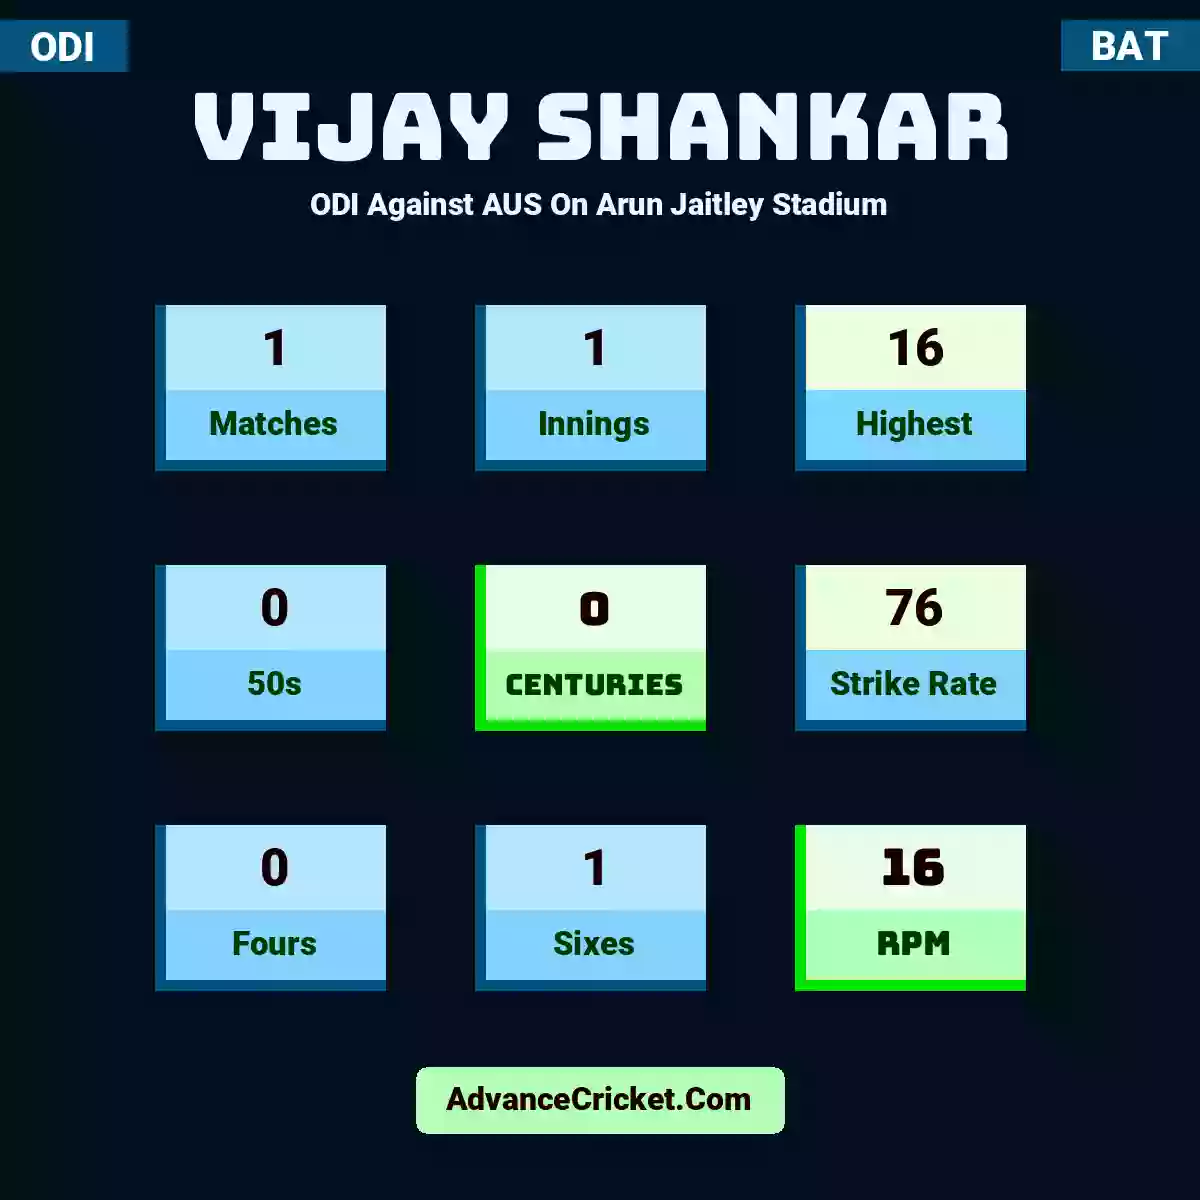 Vijay Shankar ODI  Against AUS On Arun Jaitley Stadium, Vijay Shankar played 1 matches, scored 16 runs as highest, 0 half-centuries, and 0 centuries, with a strike rate of 76. V.Shankar hit 0 fours and 1 sixes, with an RPM of 16.